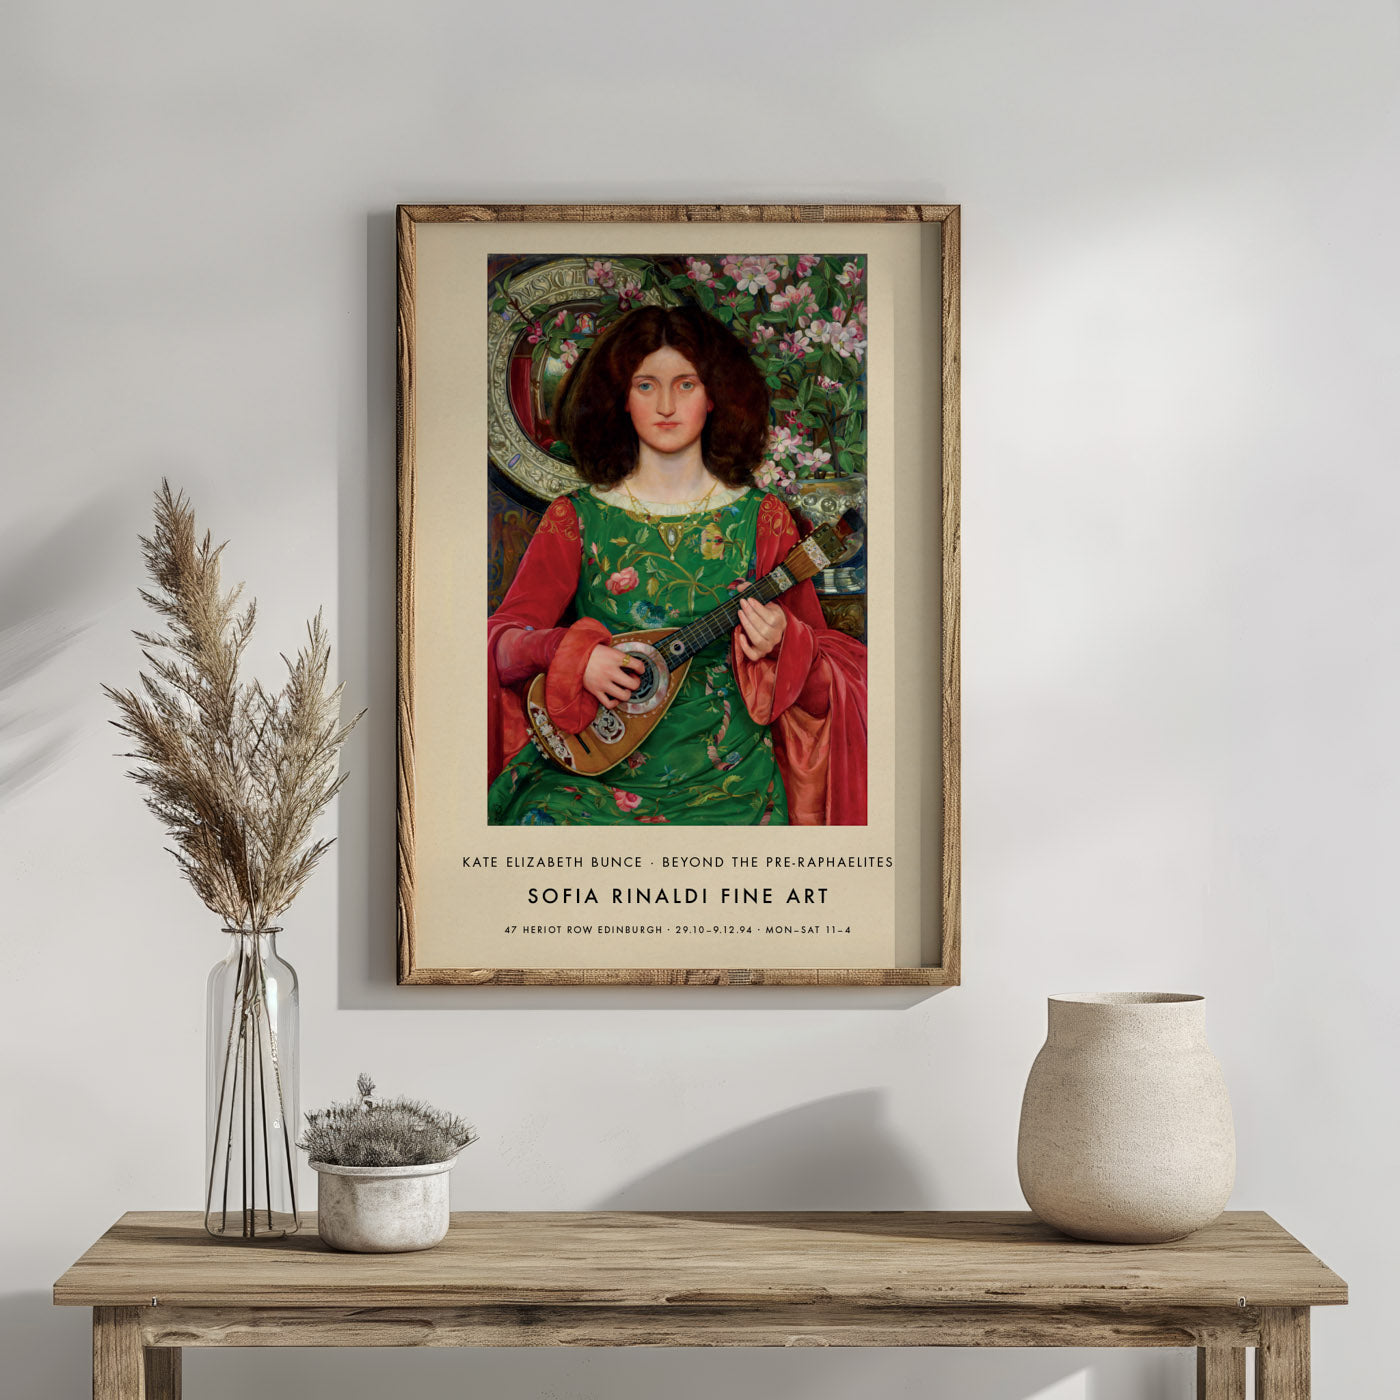 Kate Elizabeth Bunce 'Melody (Musica) Exhibition Poster - Pre-Raphaelite Inspired Arts & Crafts Print